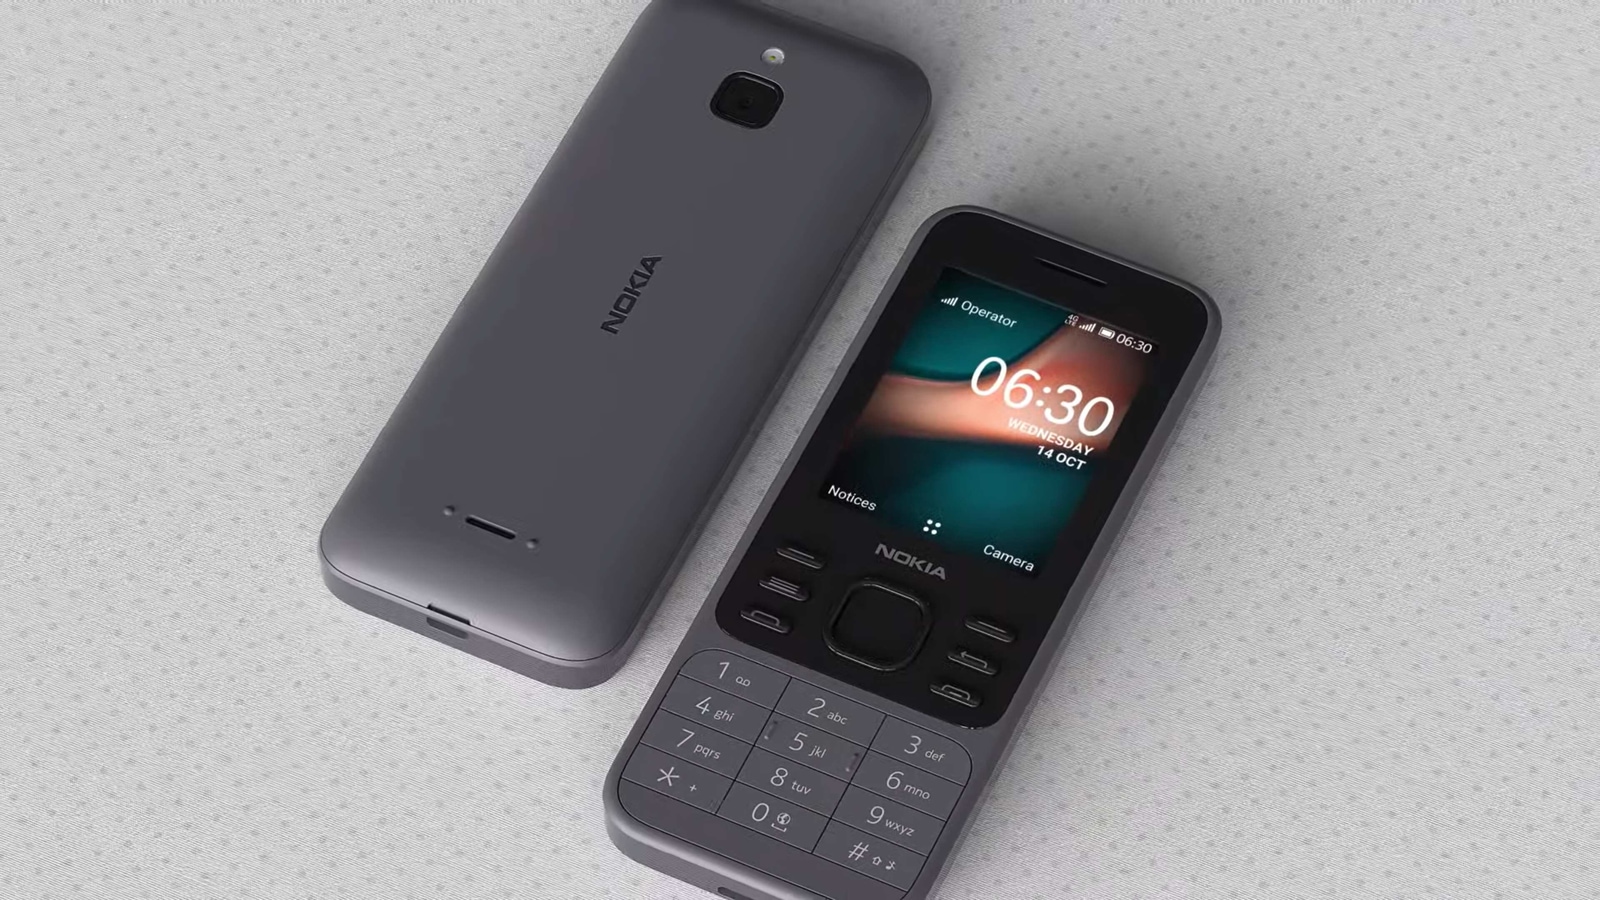 Nokia 6300 & Nokia 8000: Nokia's cheapest WhatsApp phone yet - SoyaCincau